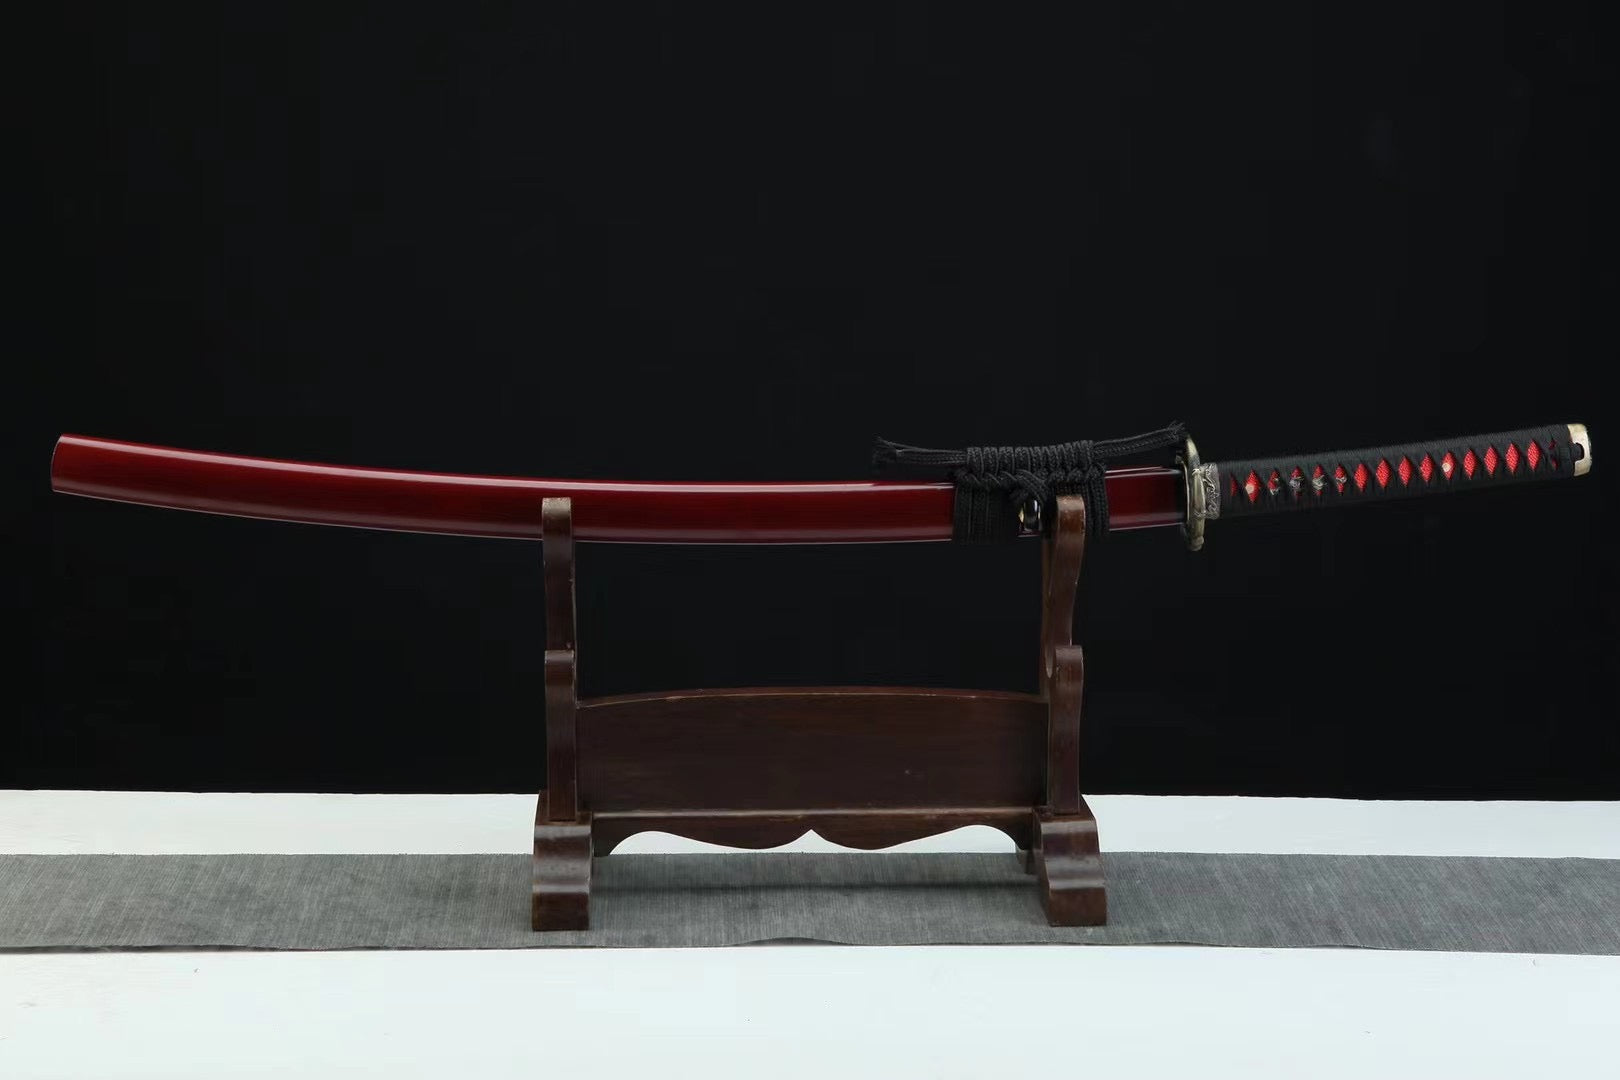 T10 High Carbon Steel Clay Tempered With Hamon Fire Snake Katana Sword,Real Handmade Japanese Samurai Sword Full Tang